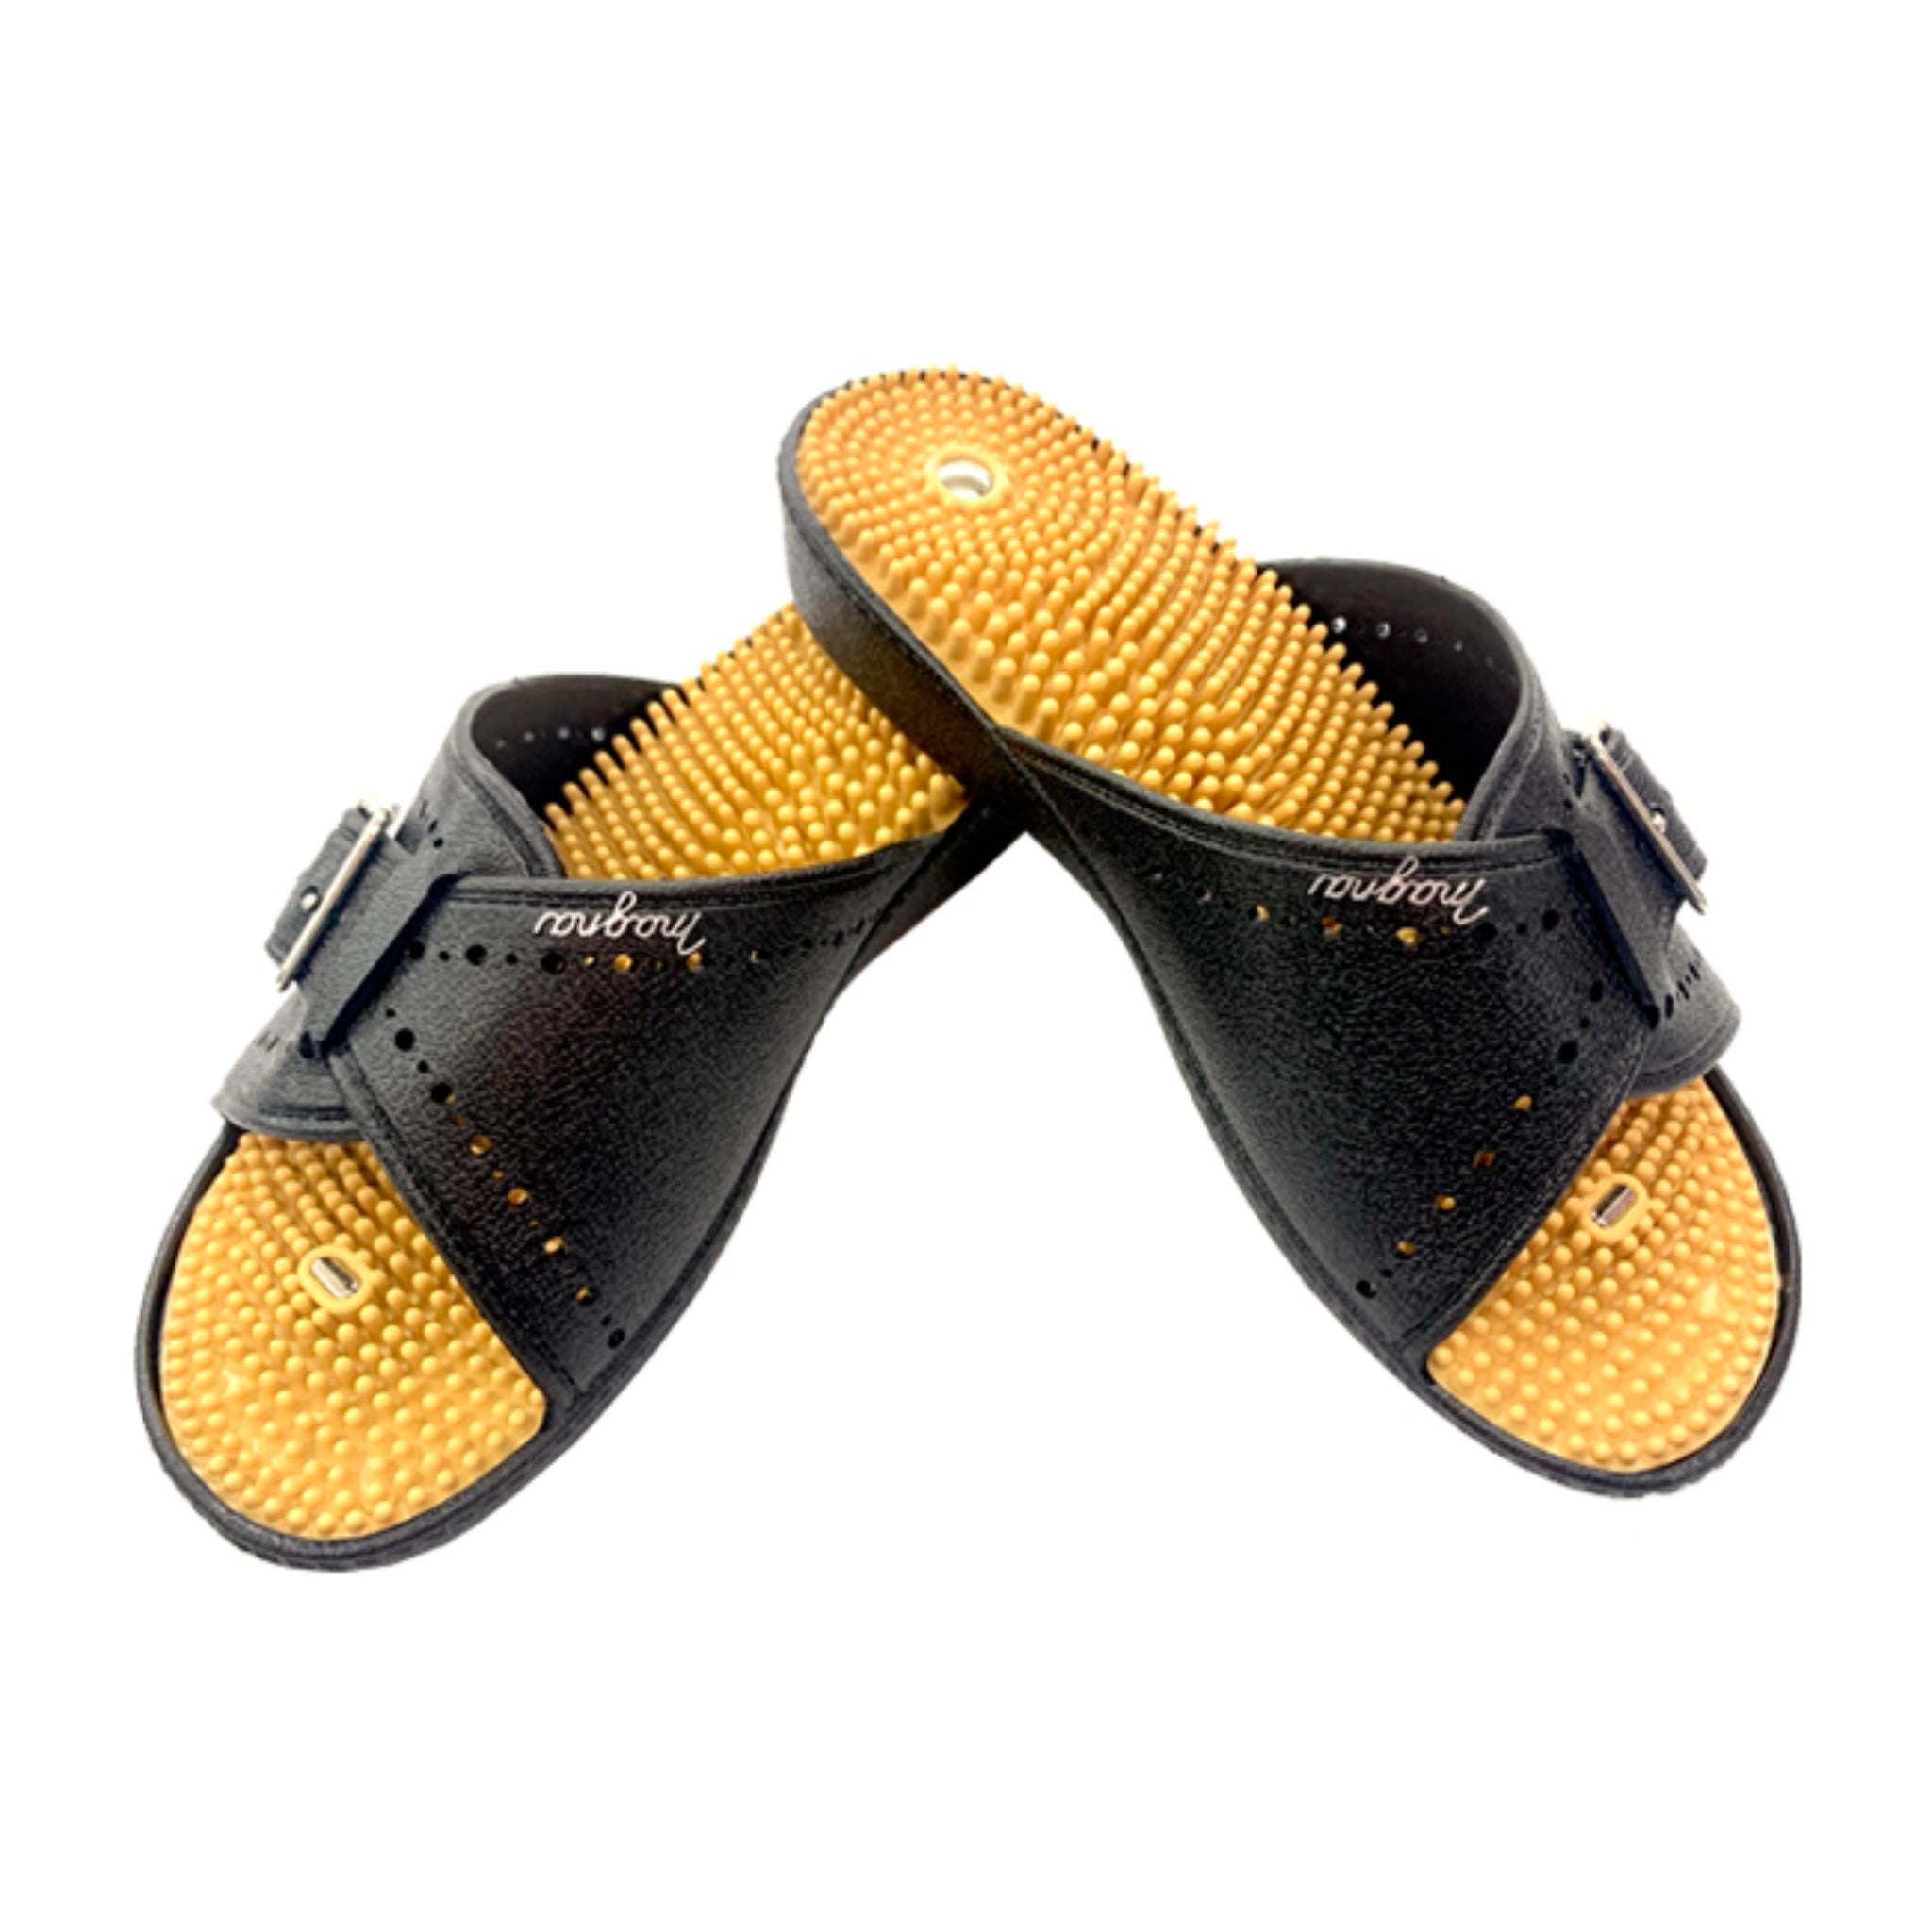 Otafuku Health Sandals No. 711 - Black